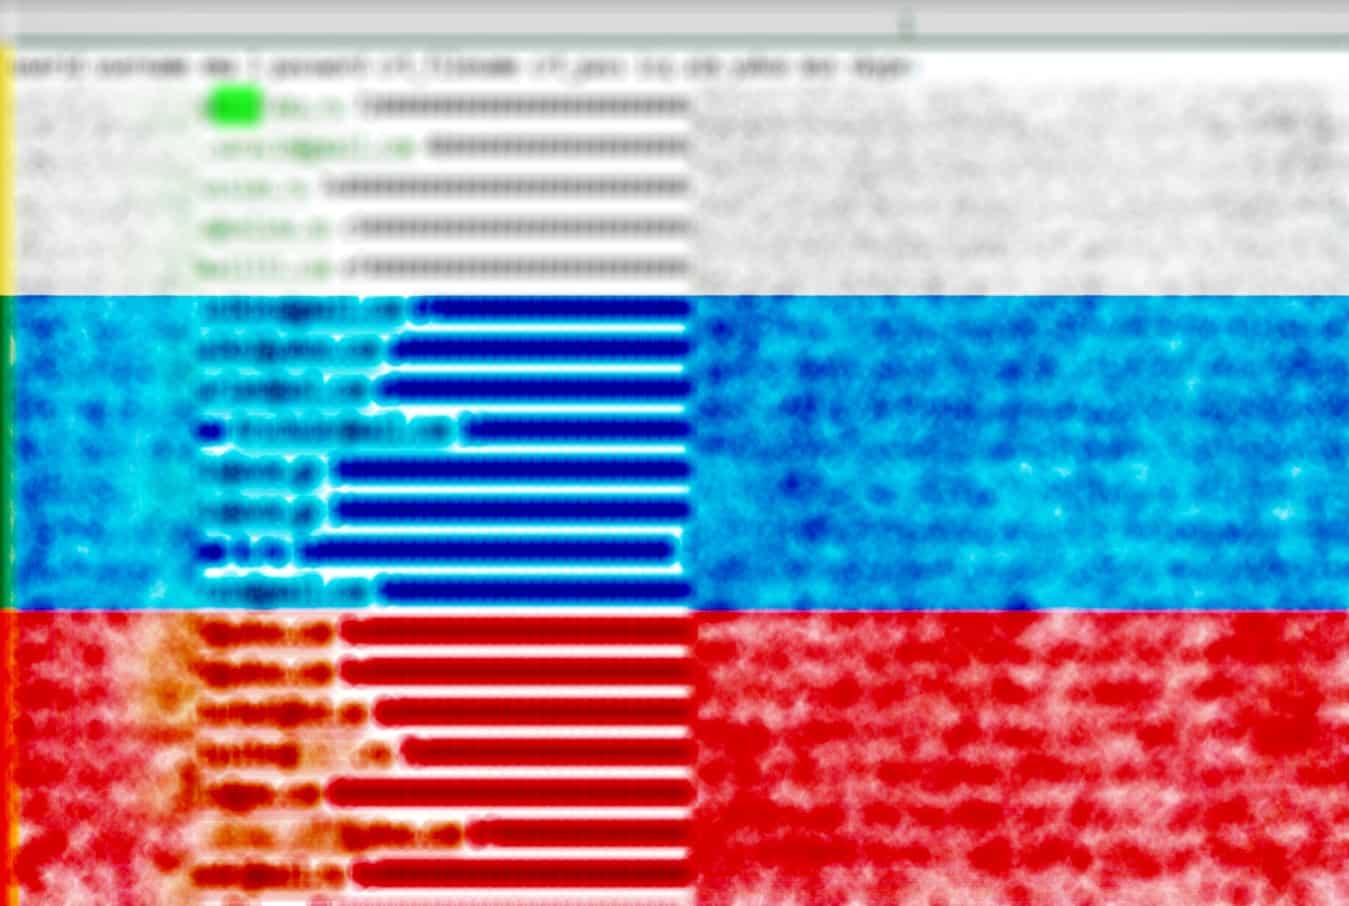 Top Russian hacker forums Maza, Verified hacked; data leaked online